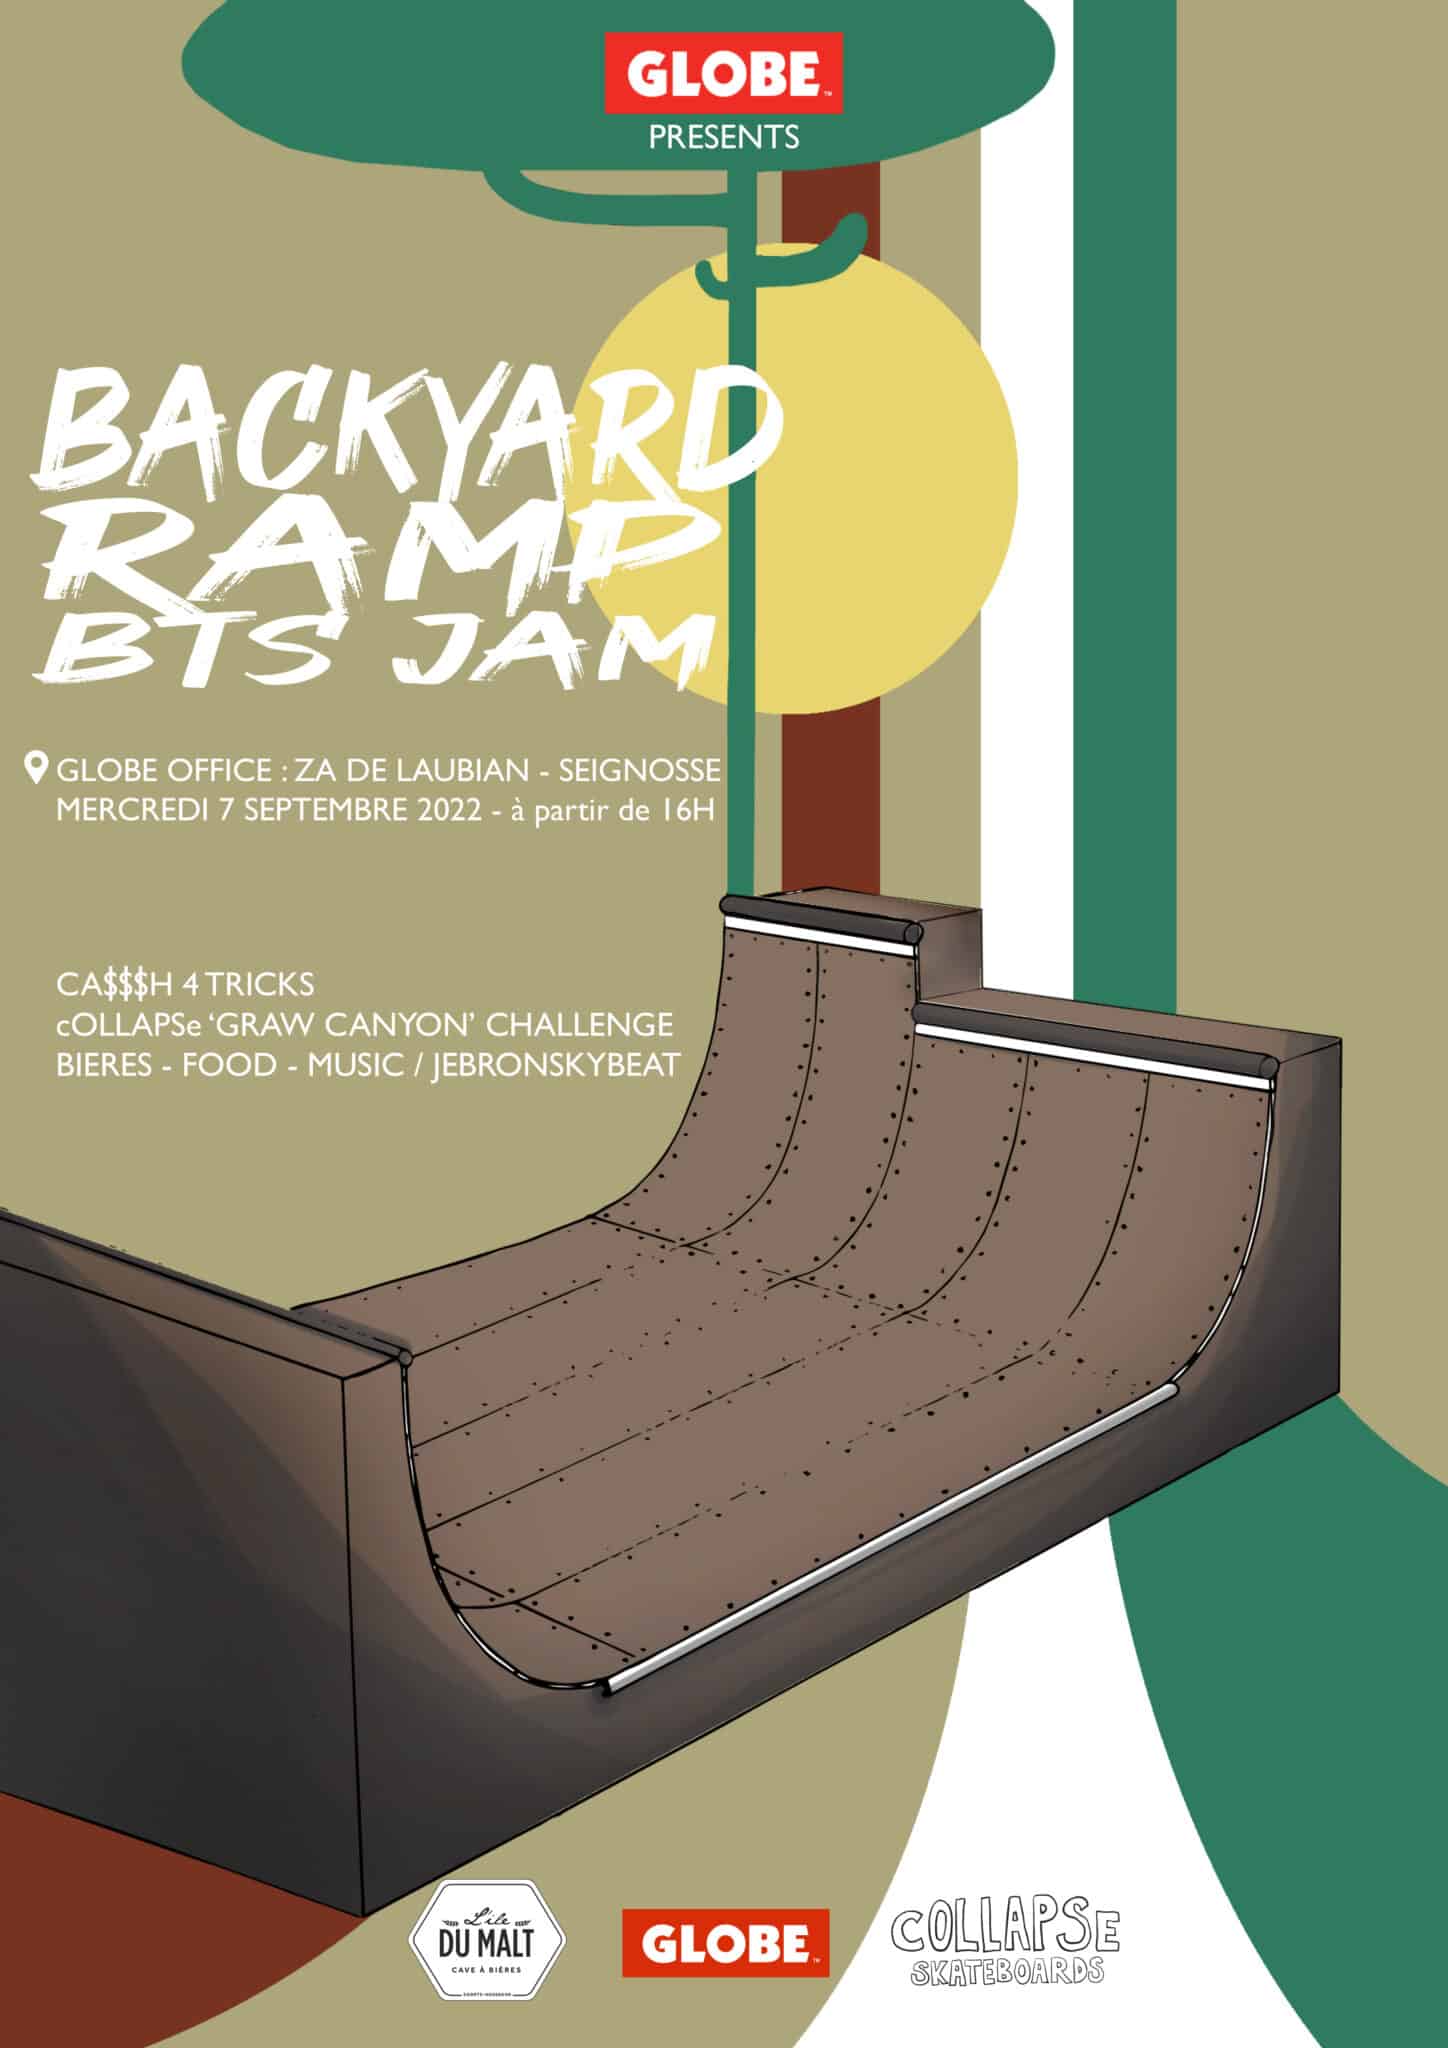 backyard ramp bts jam globe